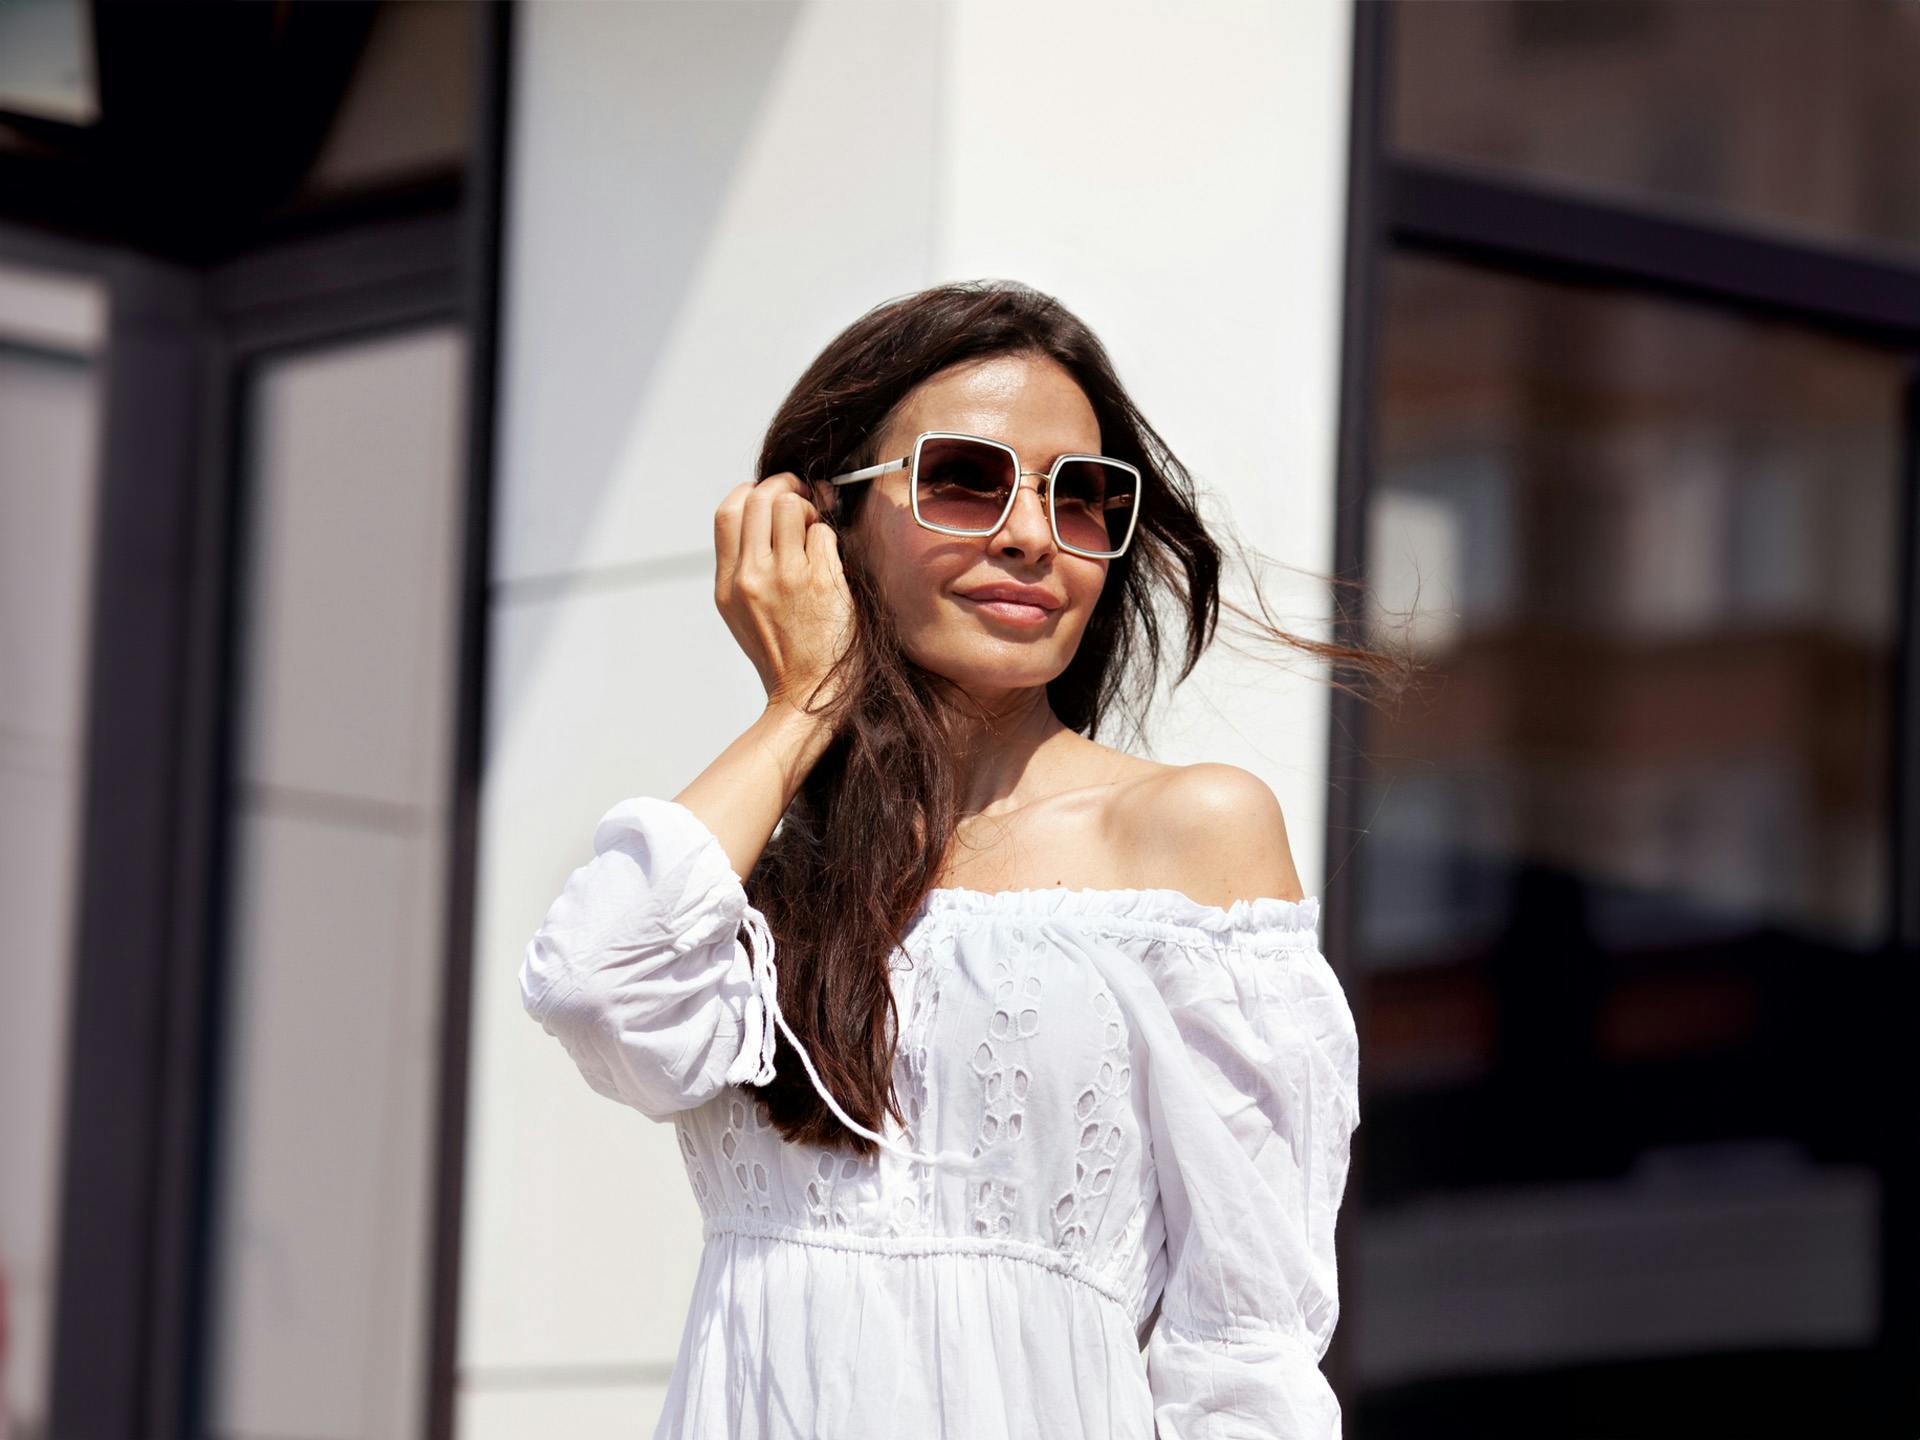 Woman wearing white dress and sunglasses outside